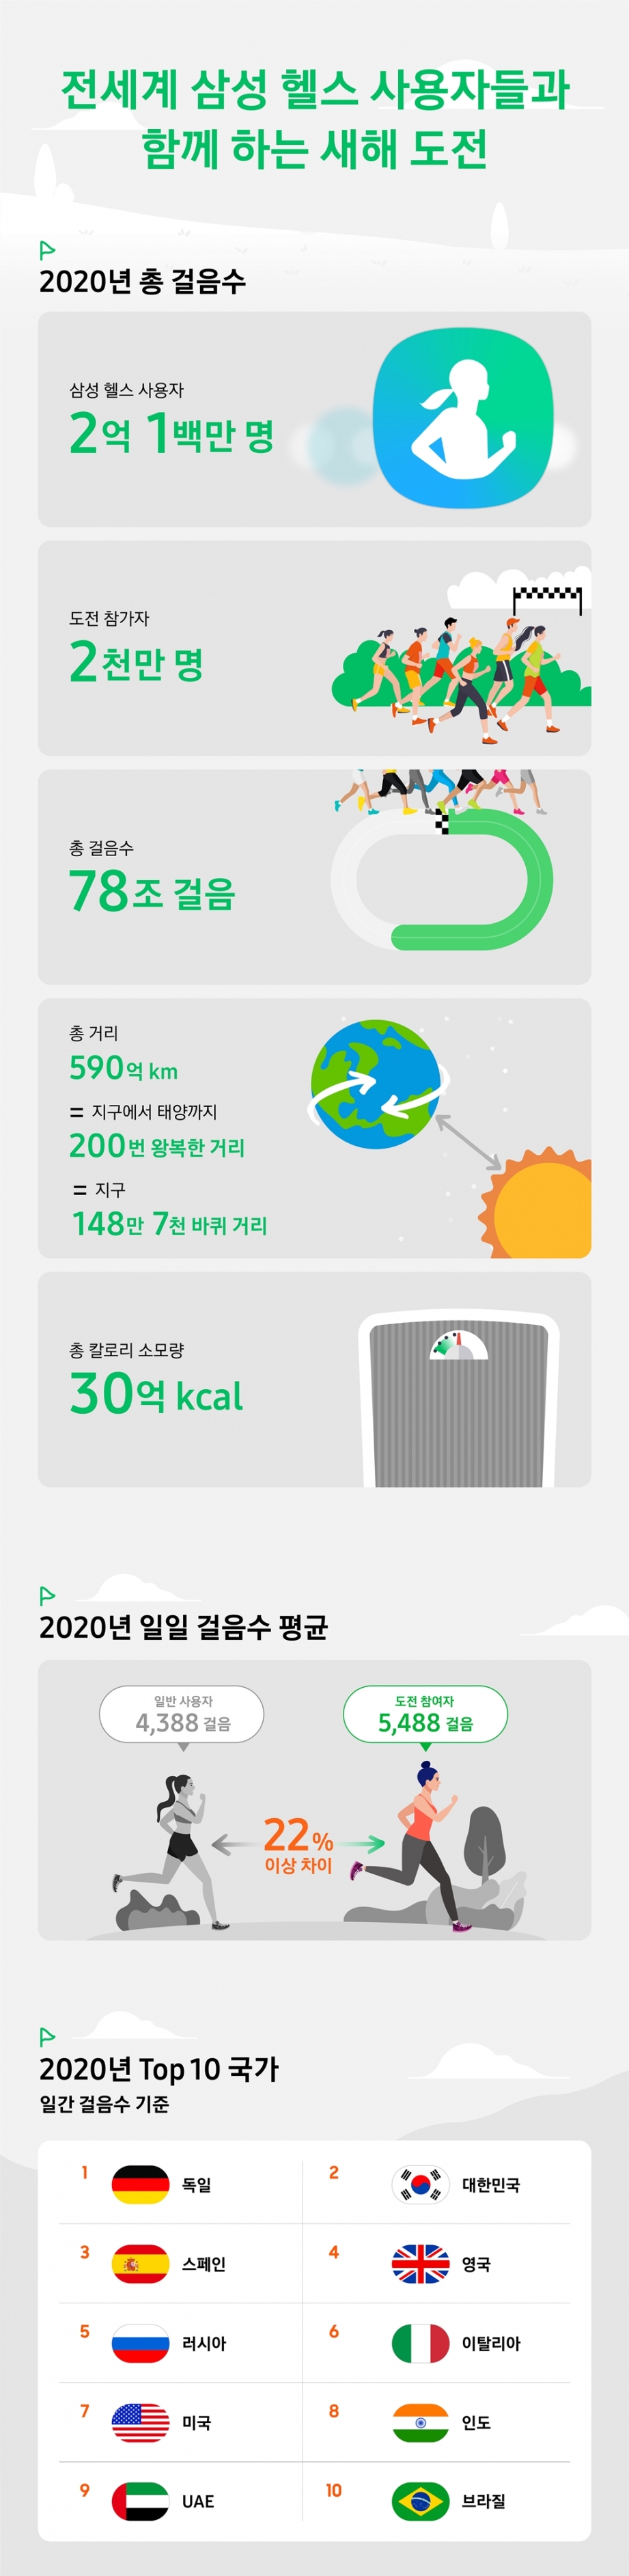 Samsung-Health_Group-Challenge_Infographic_KR.jpg